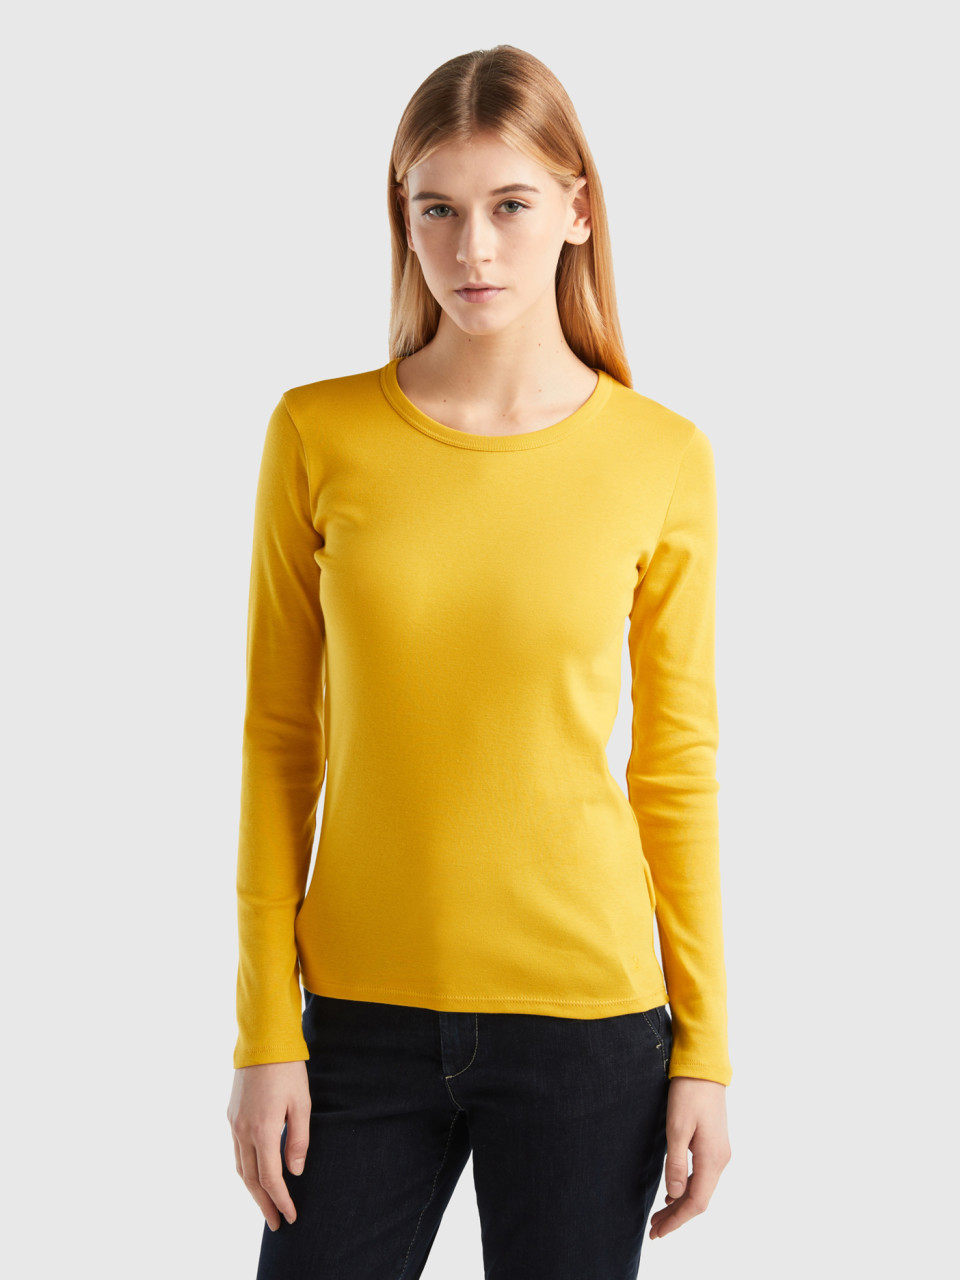 Benetton, Camiseta De Manga Larga De Algodón Puro, Amarillo, Mujer